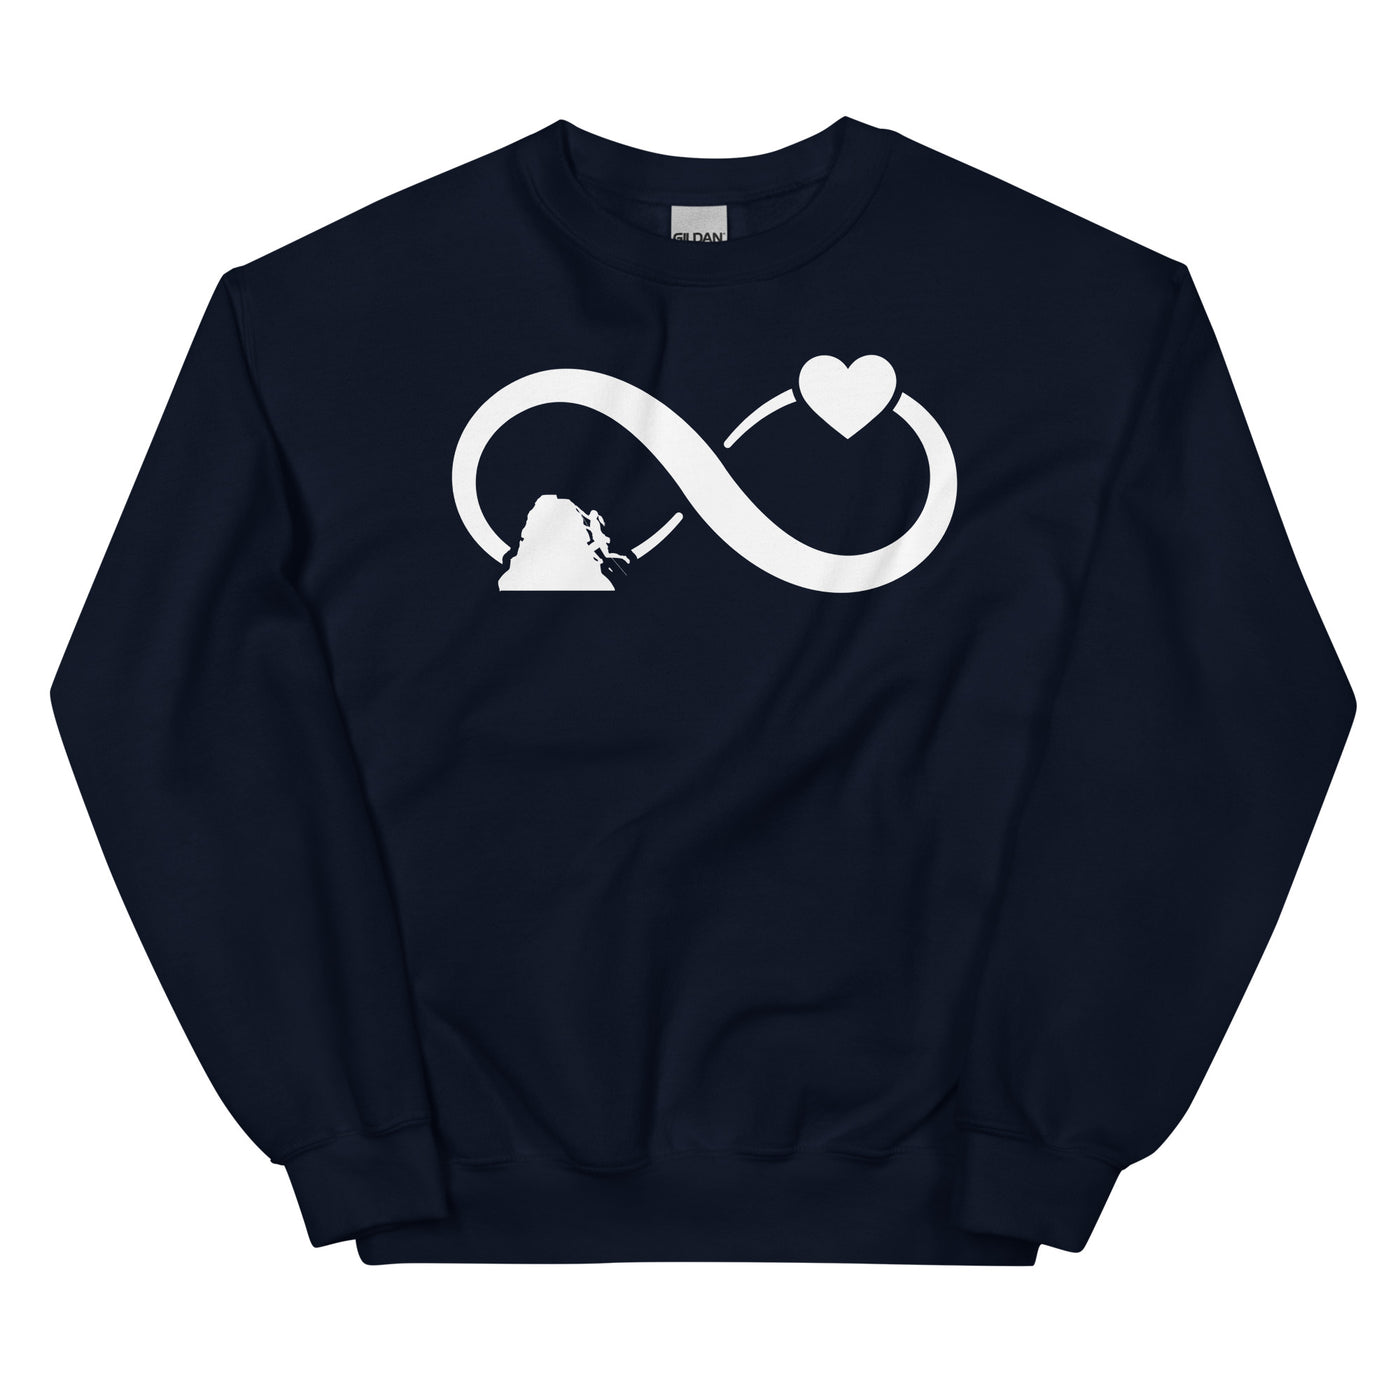 Infinity Heart and Climbing 1 - Sweatshirt (Unisex) klettern xxx yyy zzz Navy